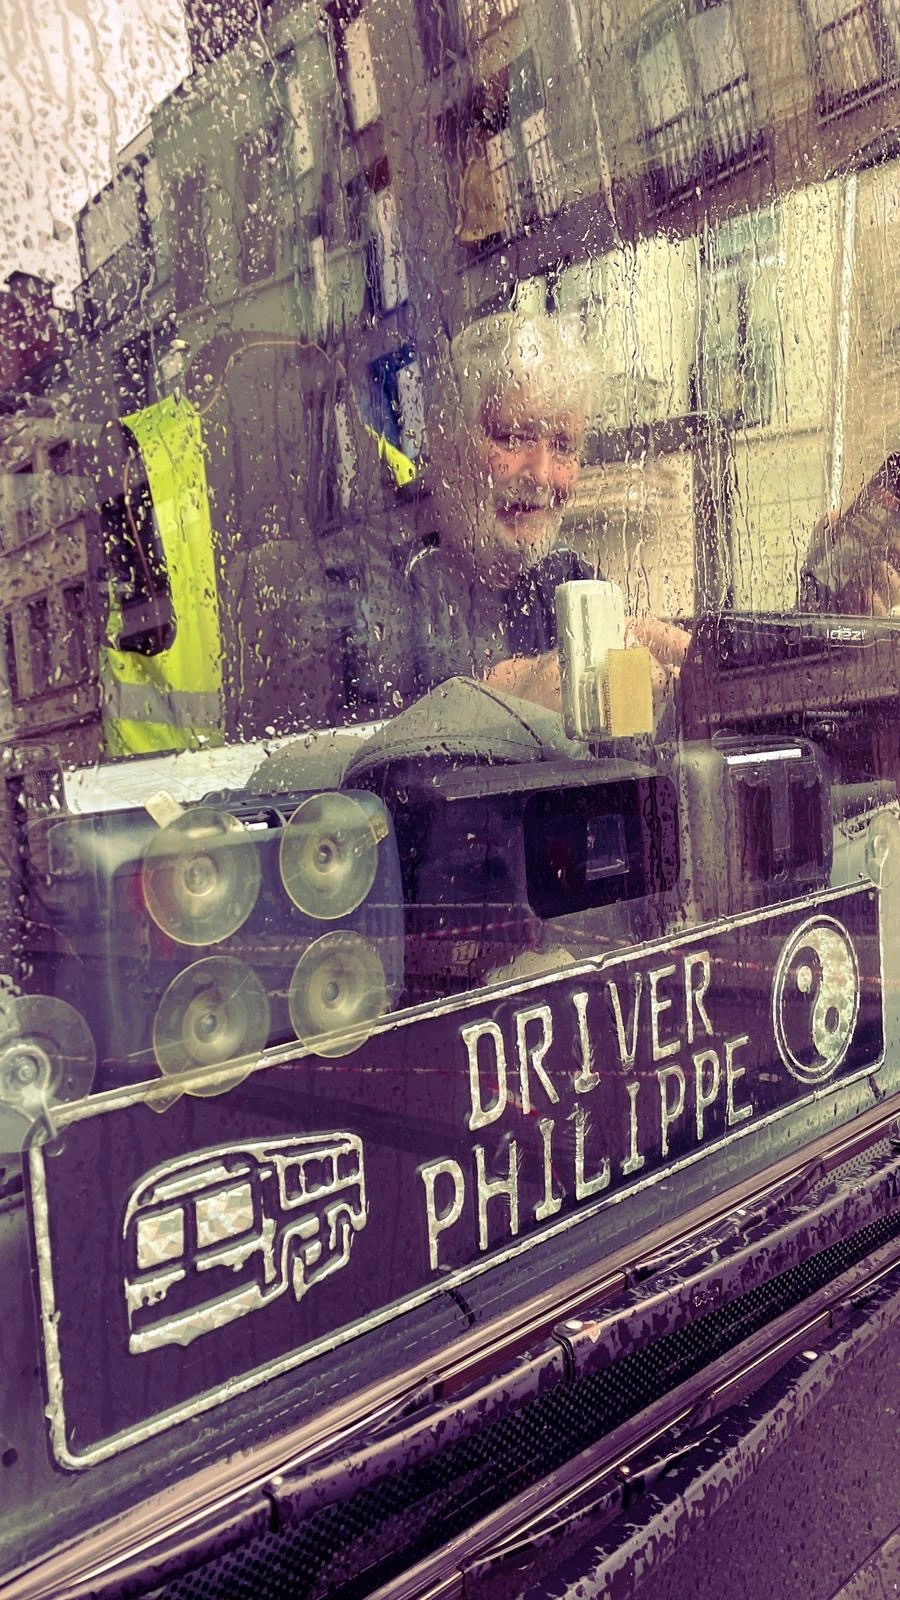 A bus driver, seen through a rain-soaked windscreen